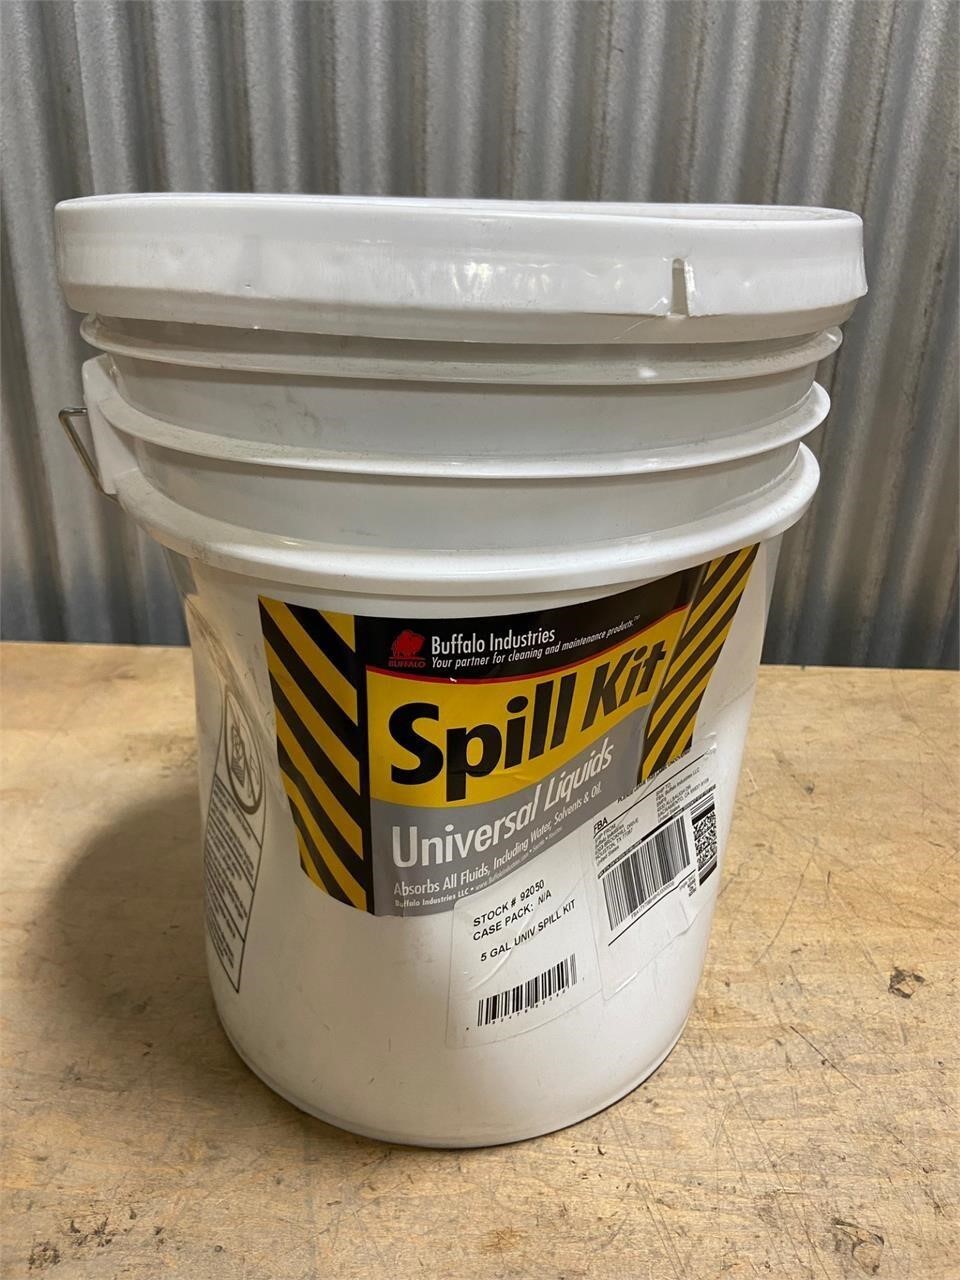 Buffalo Industries Universal Spill Kit, 5 Gallon